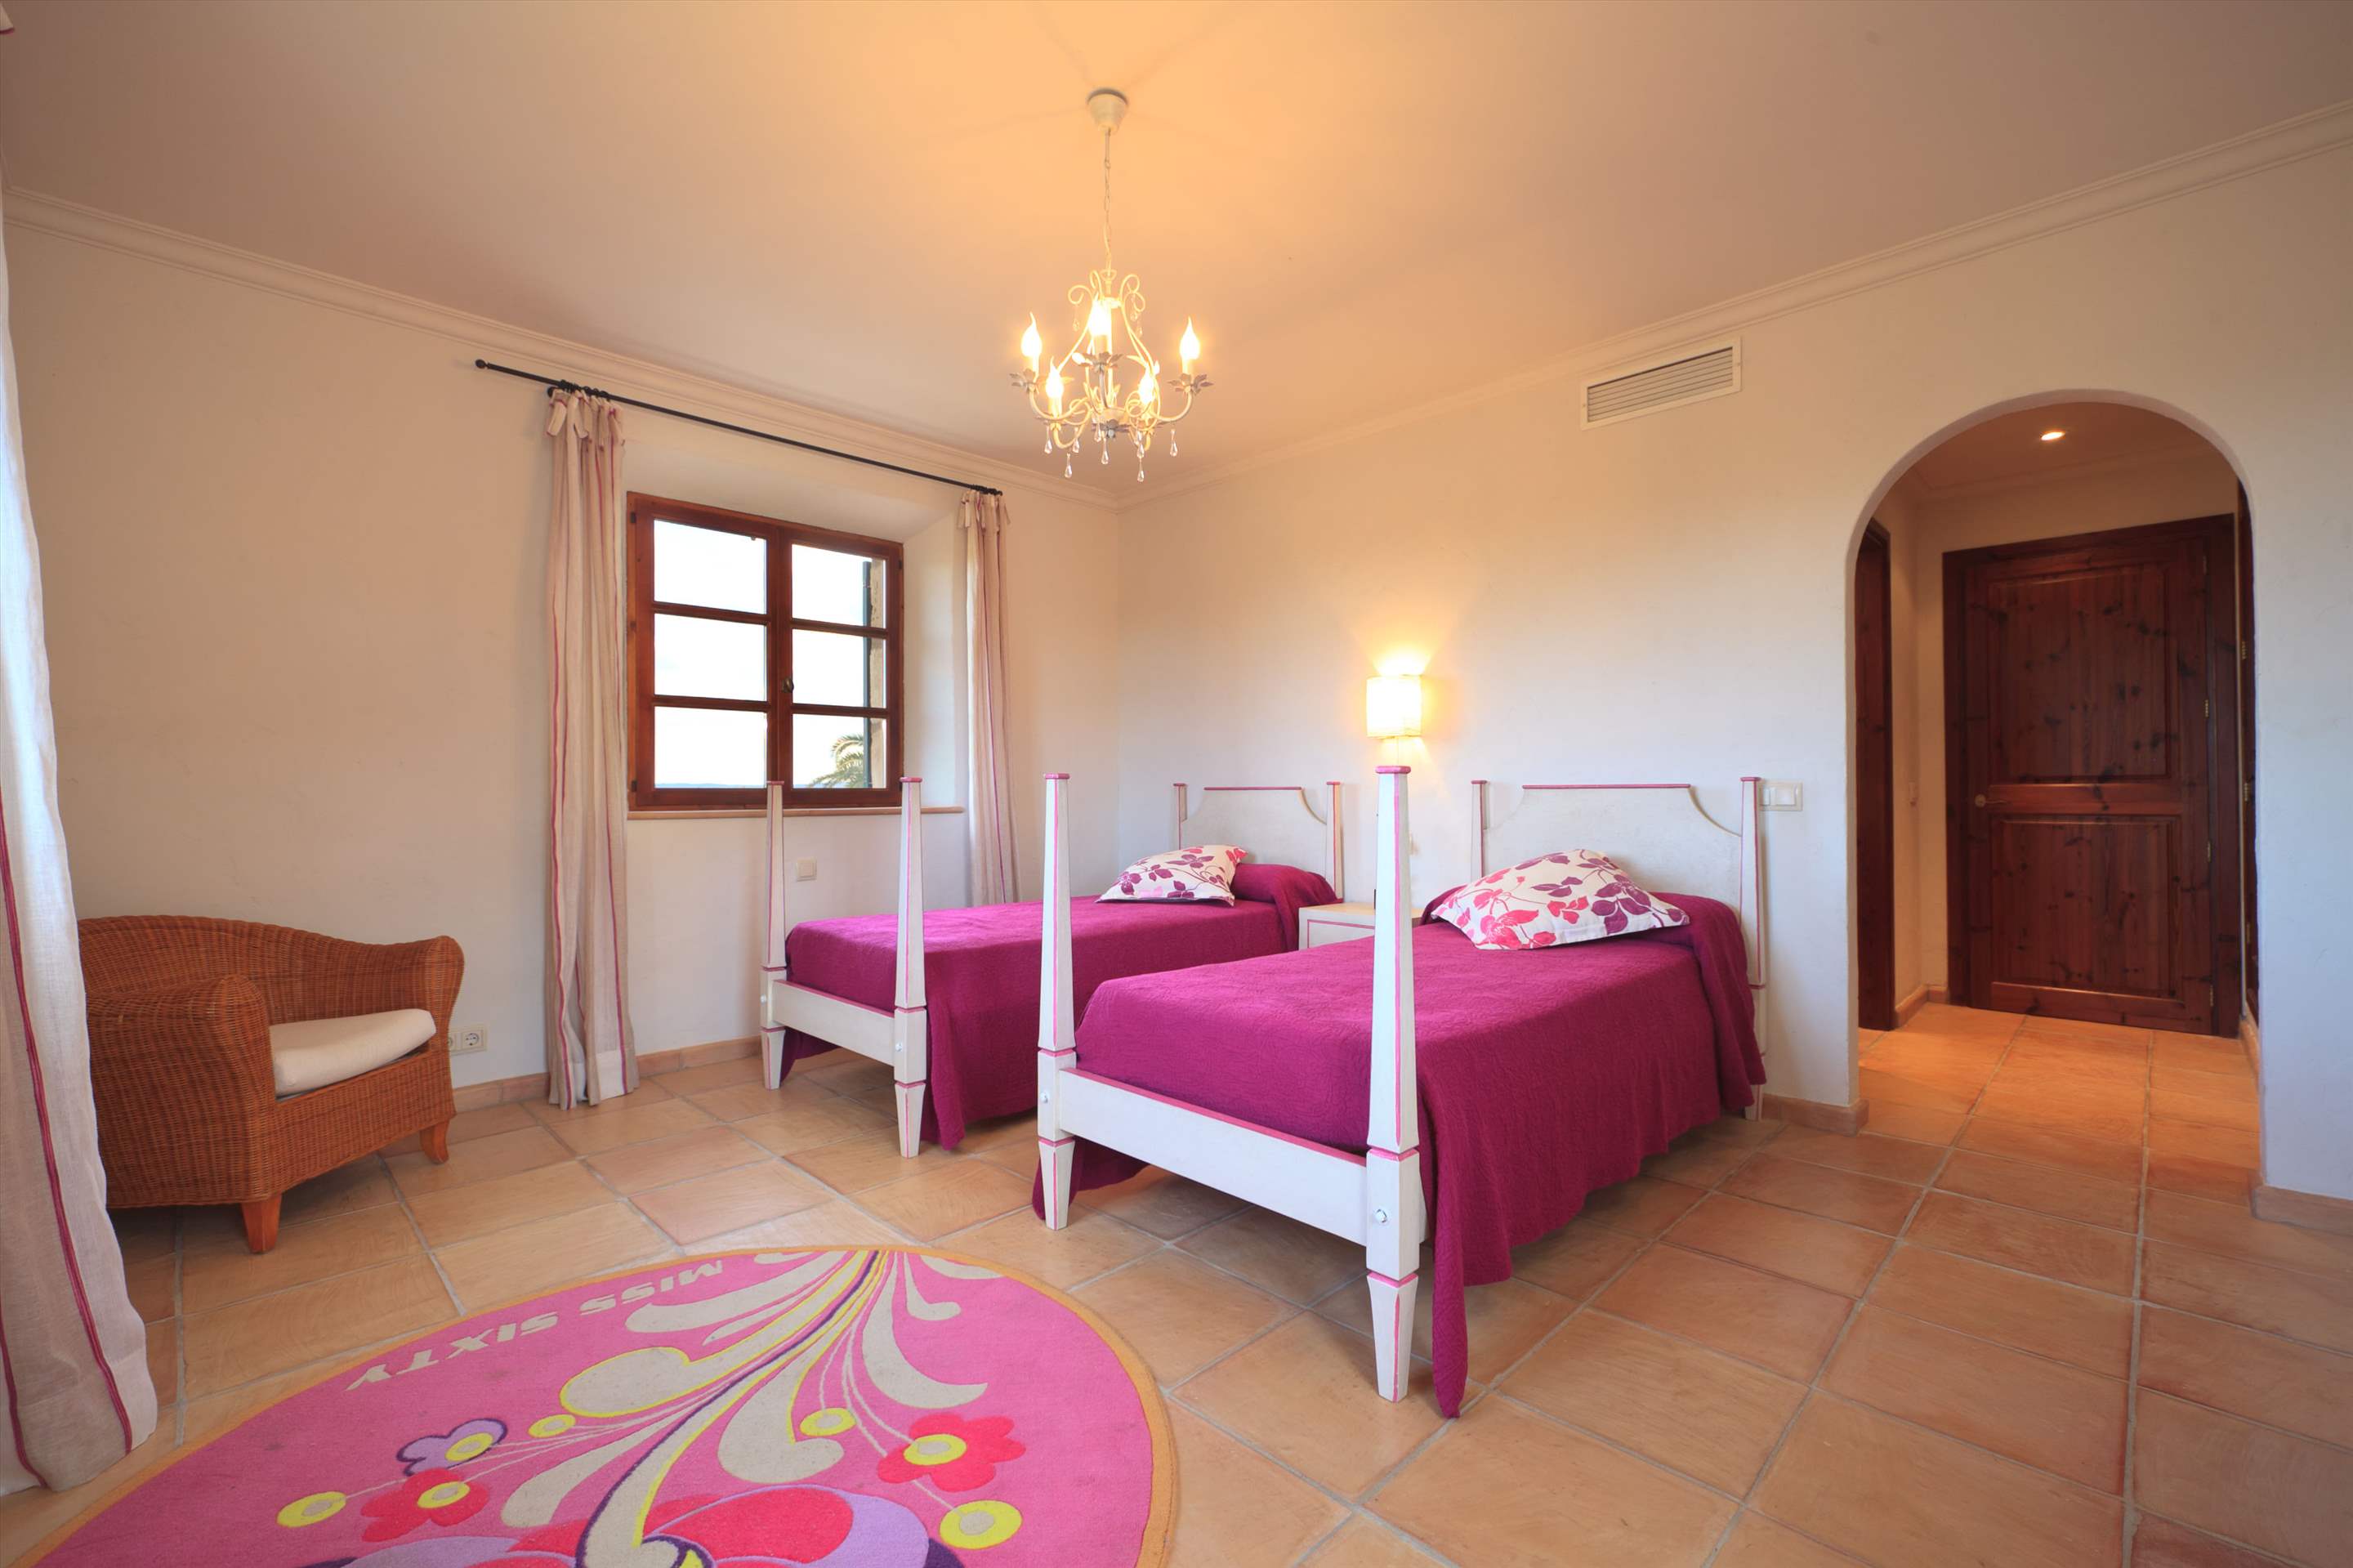 Son Ferragut de Baix , 4 bedroom villa in Sa Pobla, Buger, Inca , Majorca Photo #11